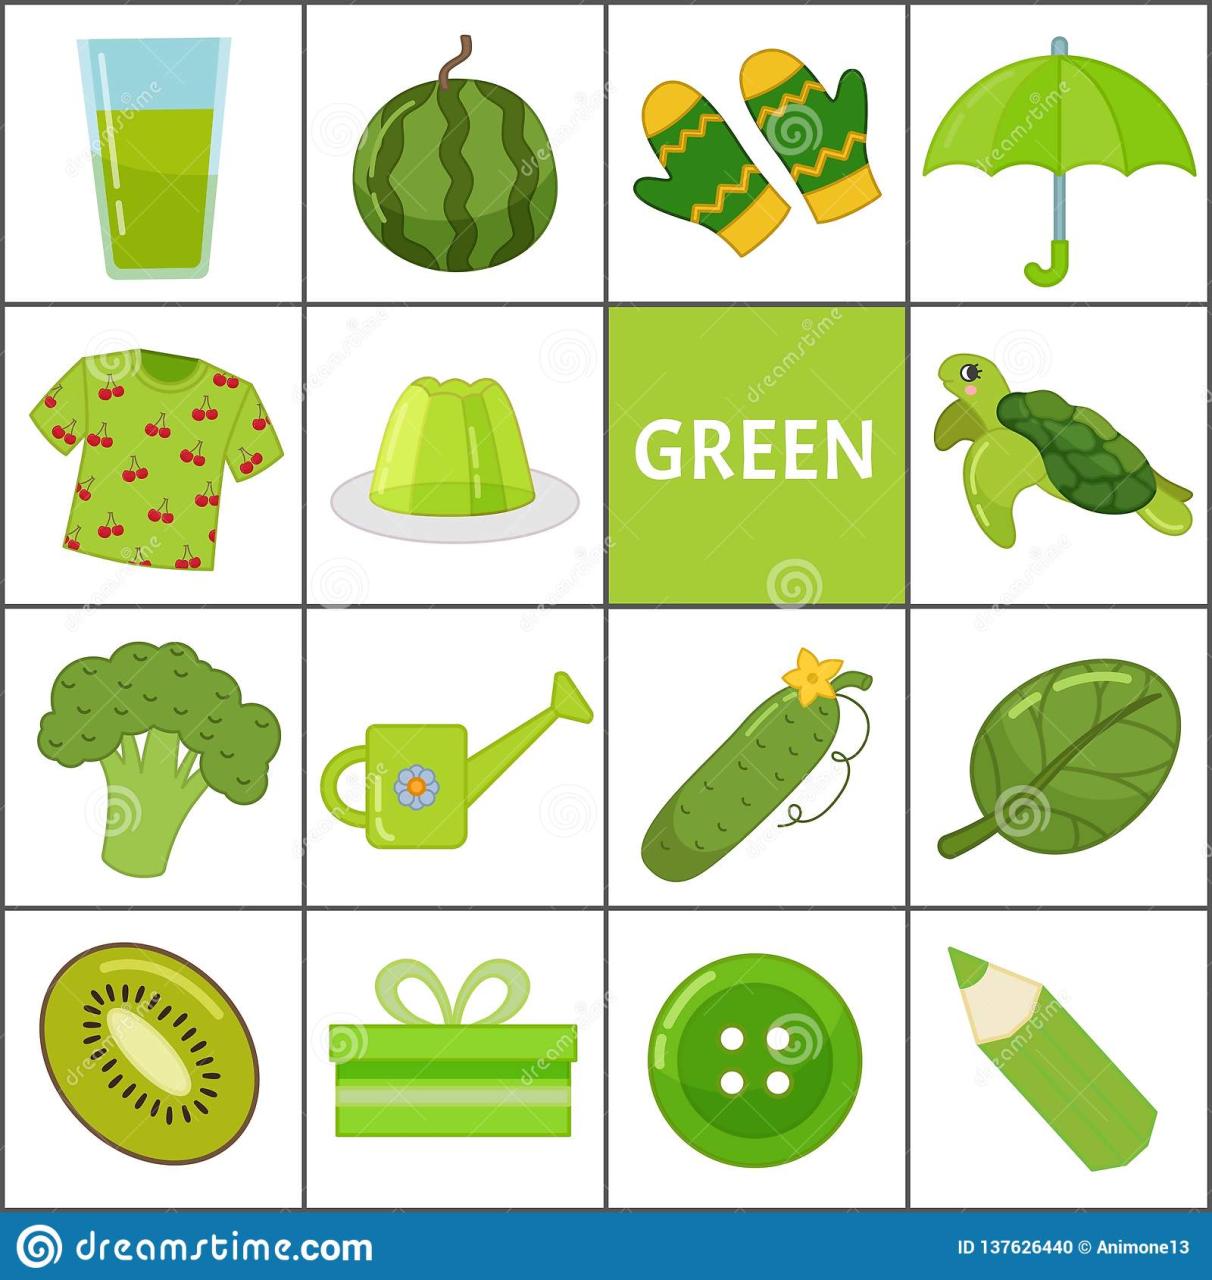 Color Green Worksheet For Toddlers